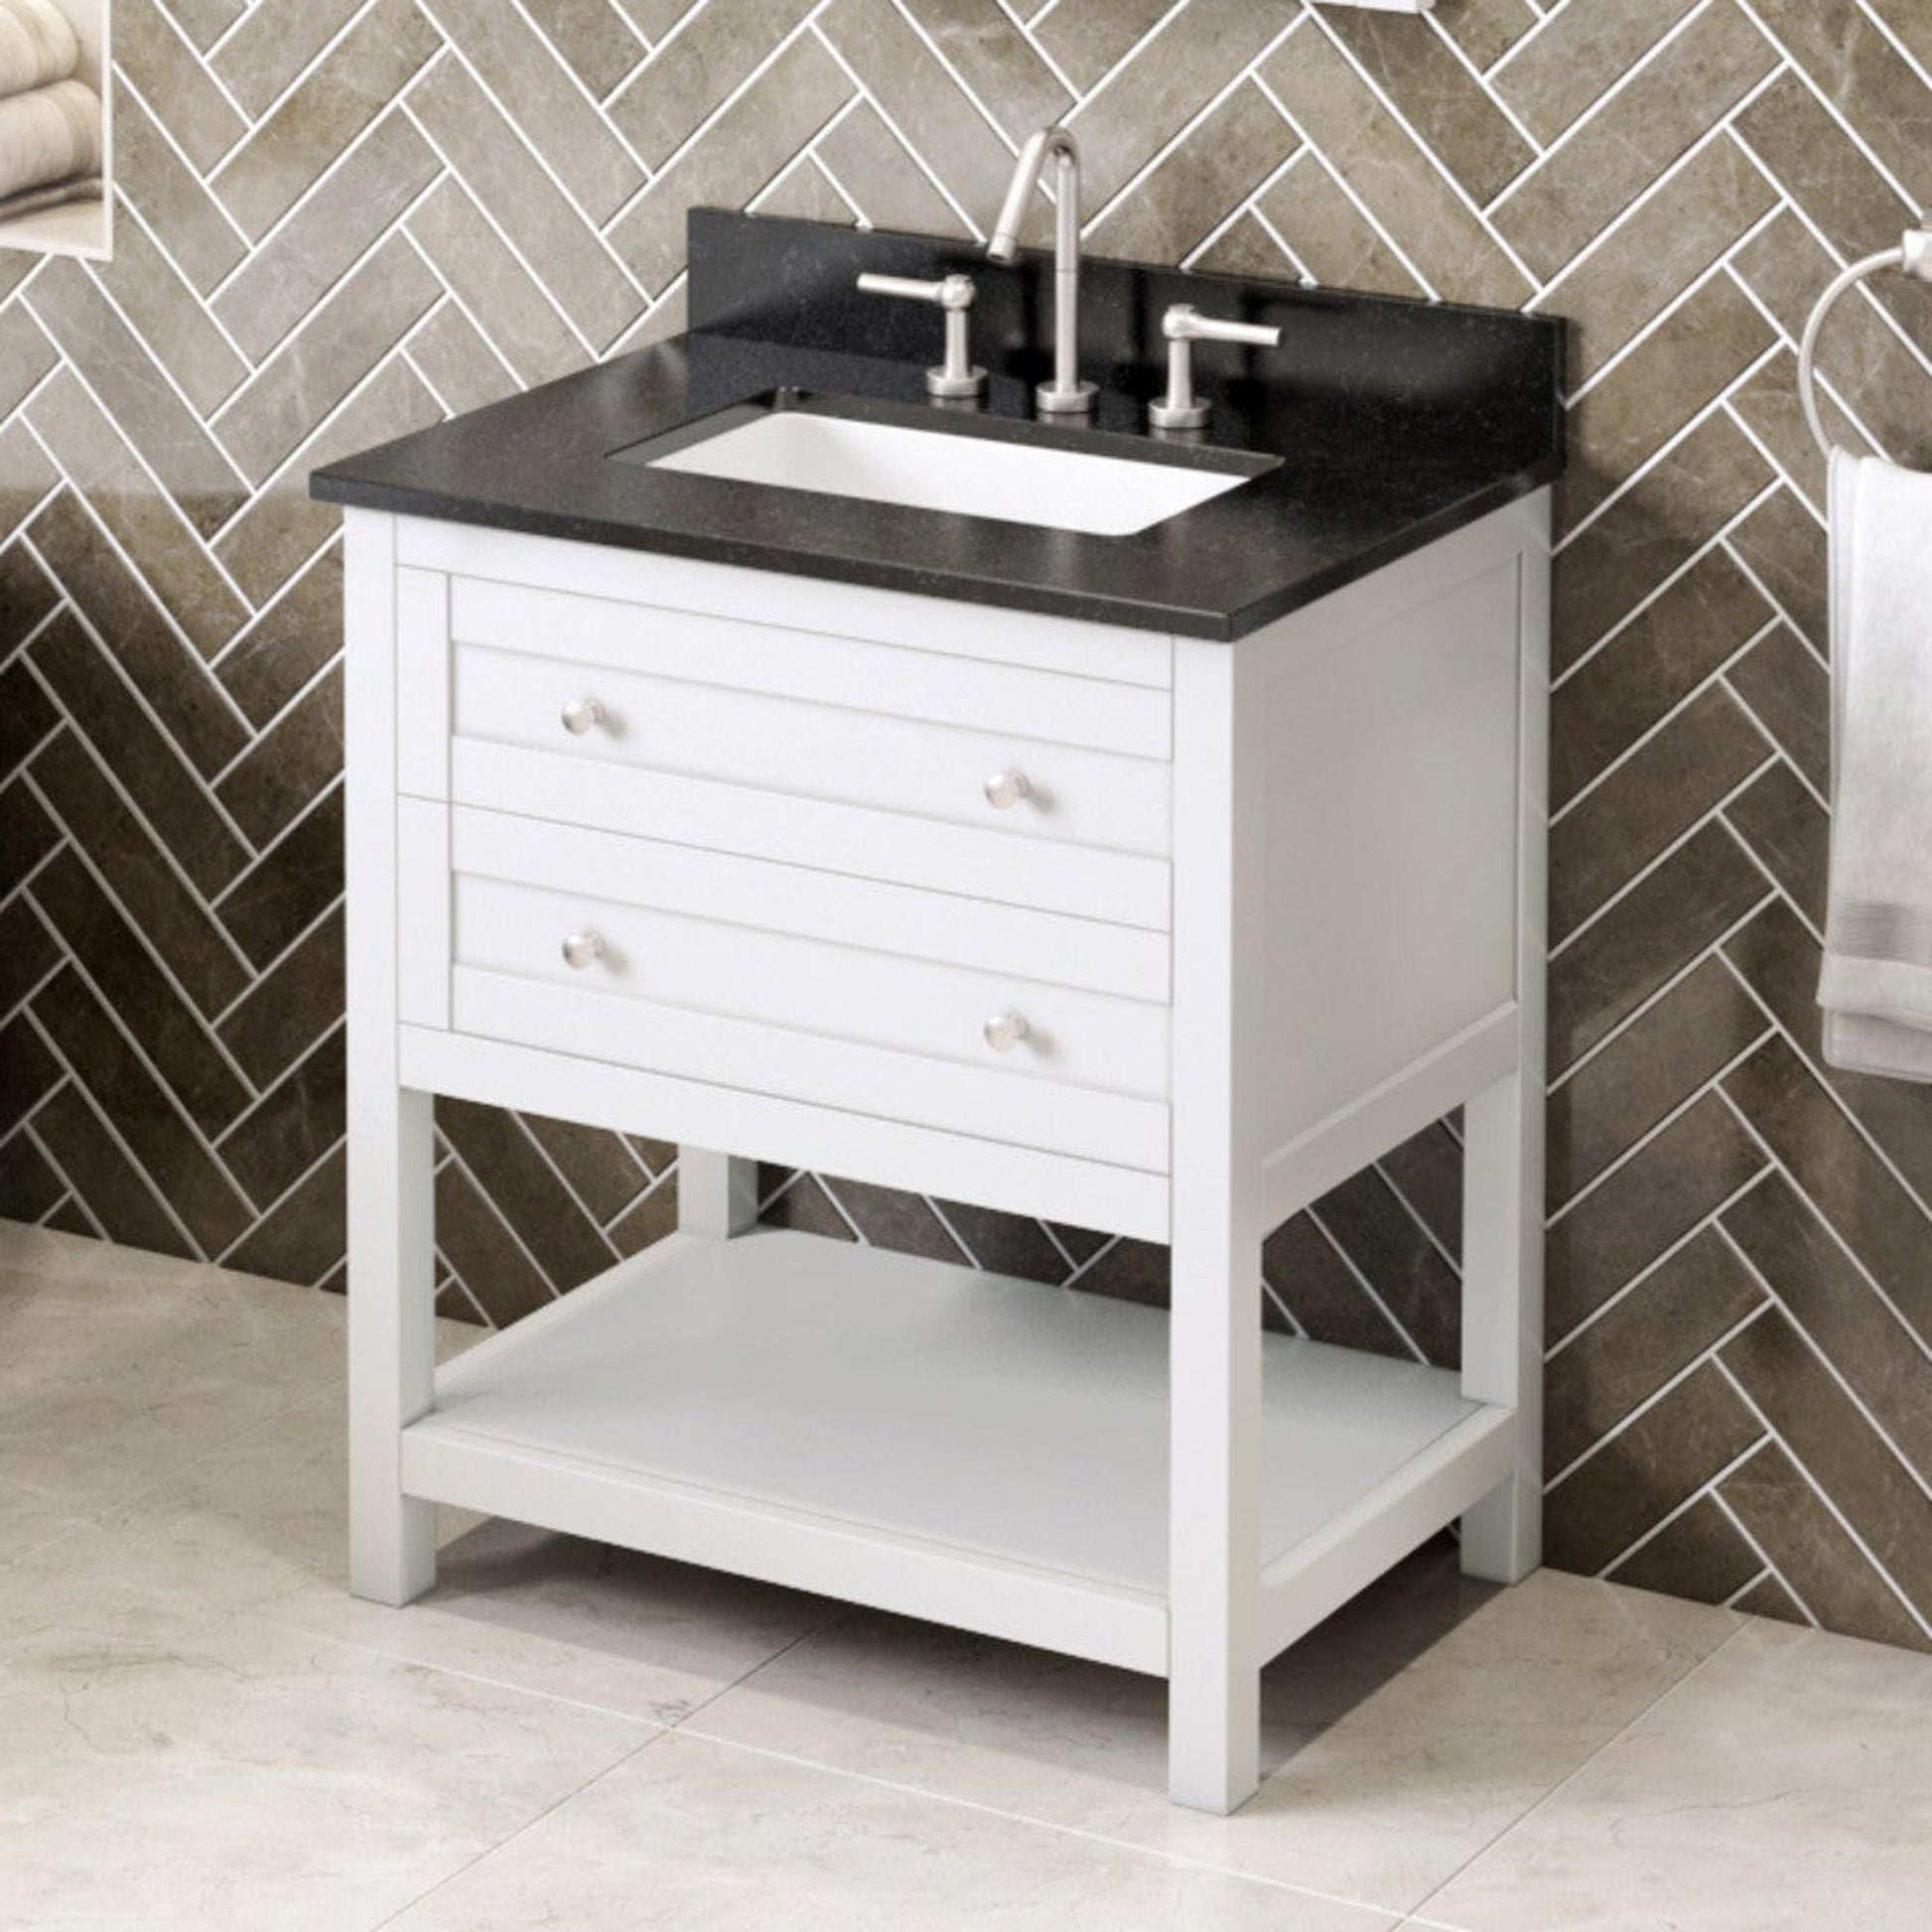 Bathroom Counter Organizer , Bathroom Organizer Countertop ,Counter Standing Rack, Size: Style1, White